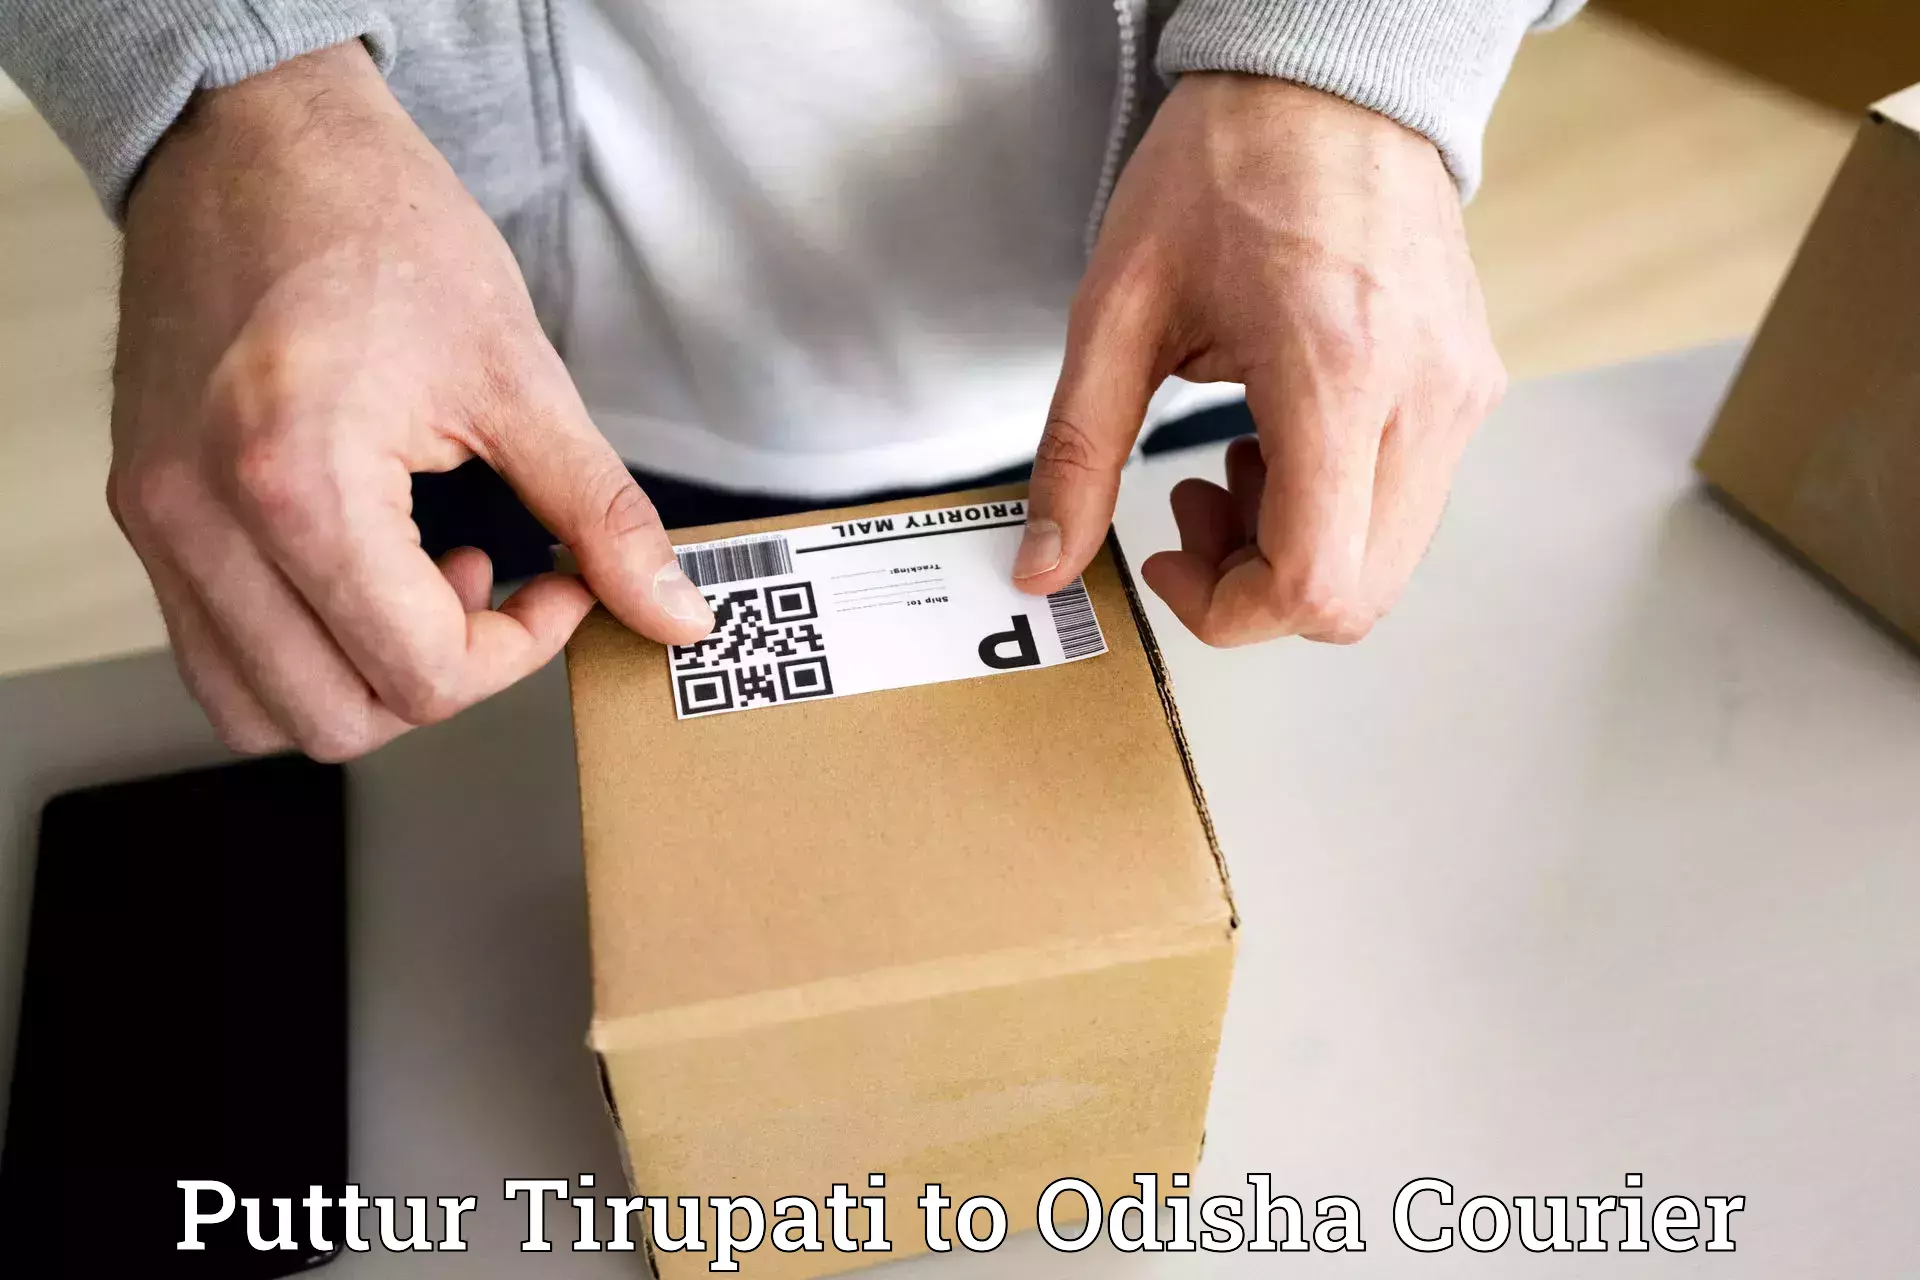 Urgent courier needs Puttur Tirupati to Jaraka